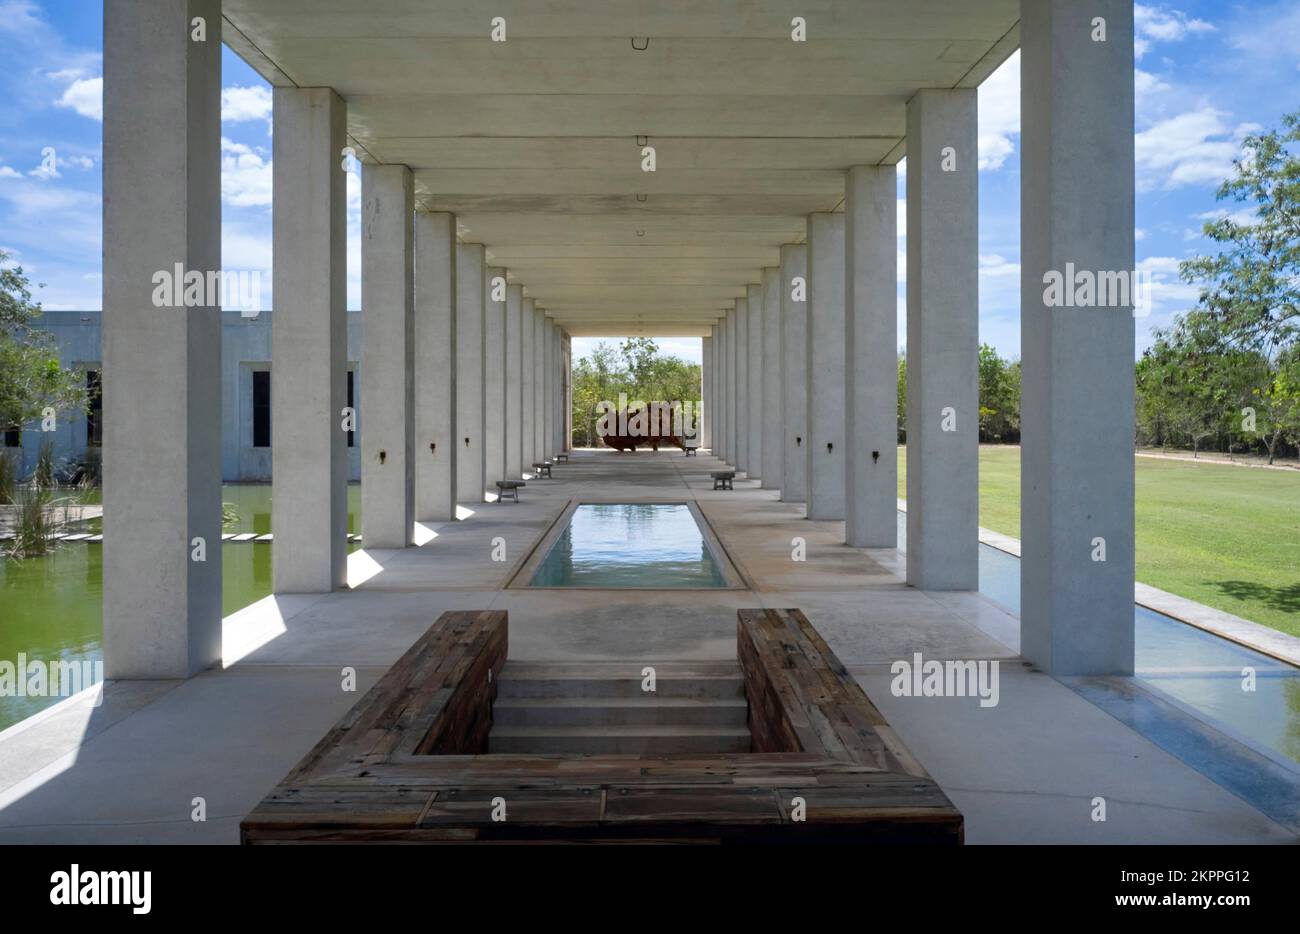 Blick auf den Pool. Plantel Matilde, Merida, Mexiko. Architekt: Javier Marín und Arcadio Marín, 2018. Stockfoto